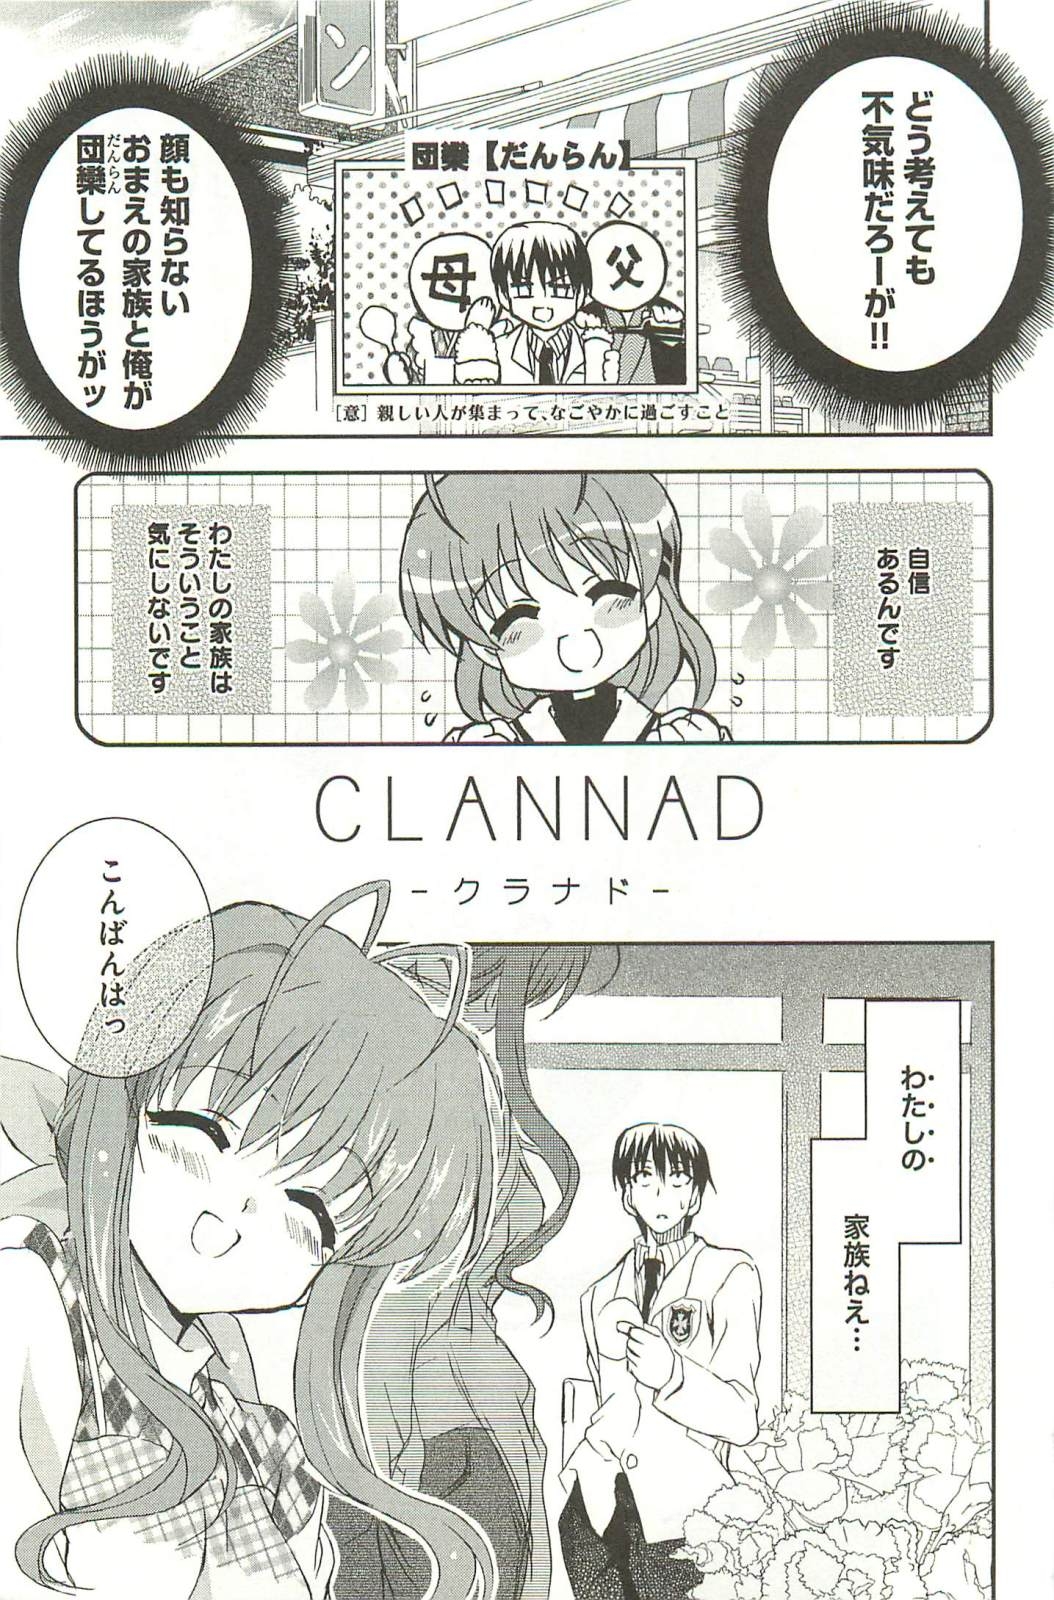 [Key/Visual Arts, Shaa] CLANNAD Vol.01 86